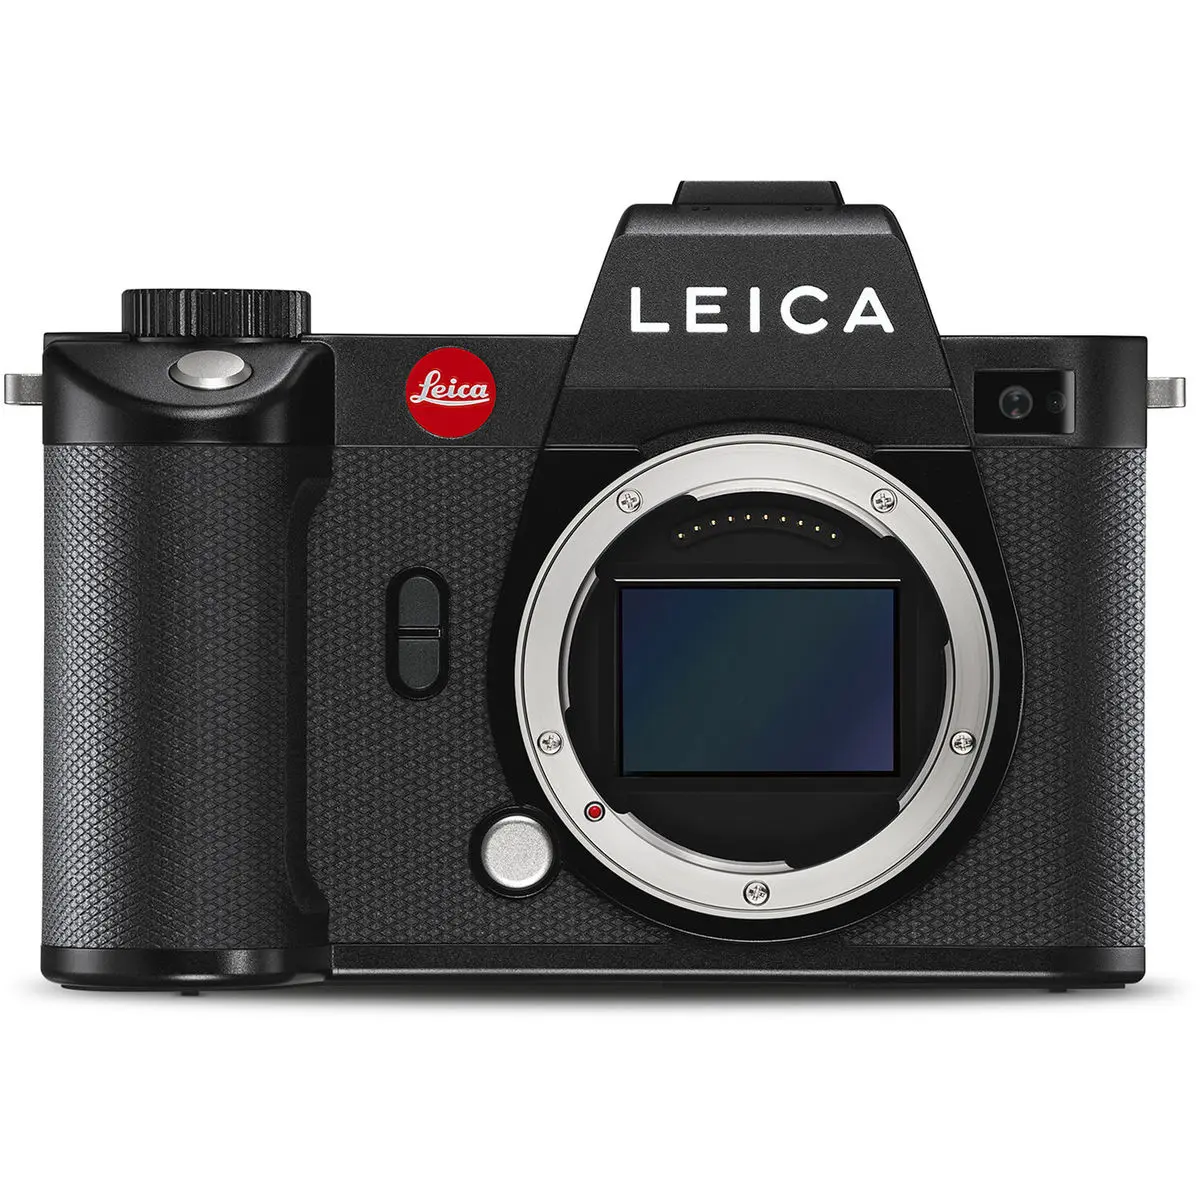 Main Image Leica SL2